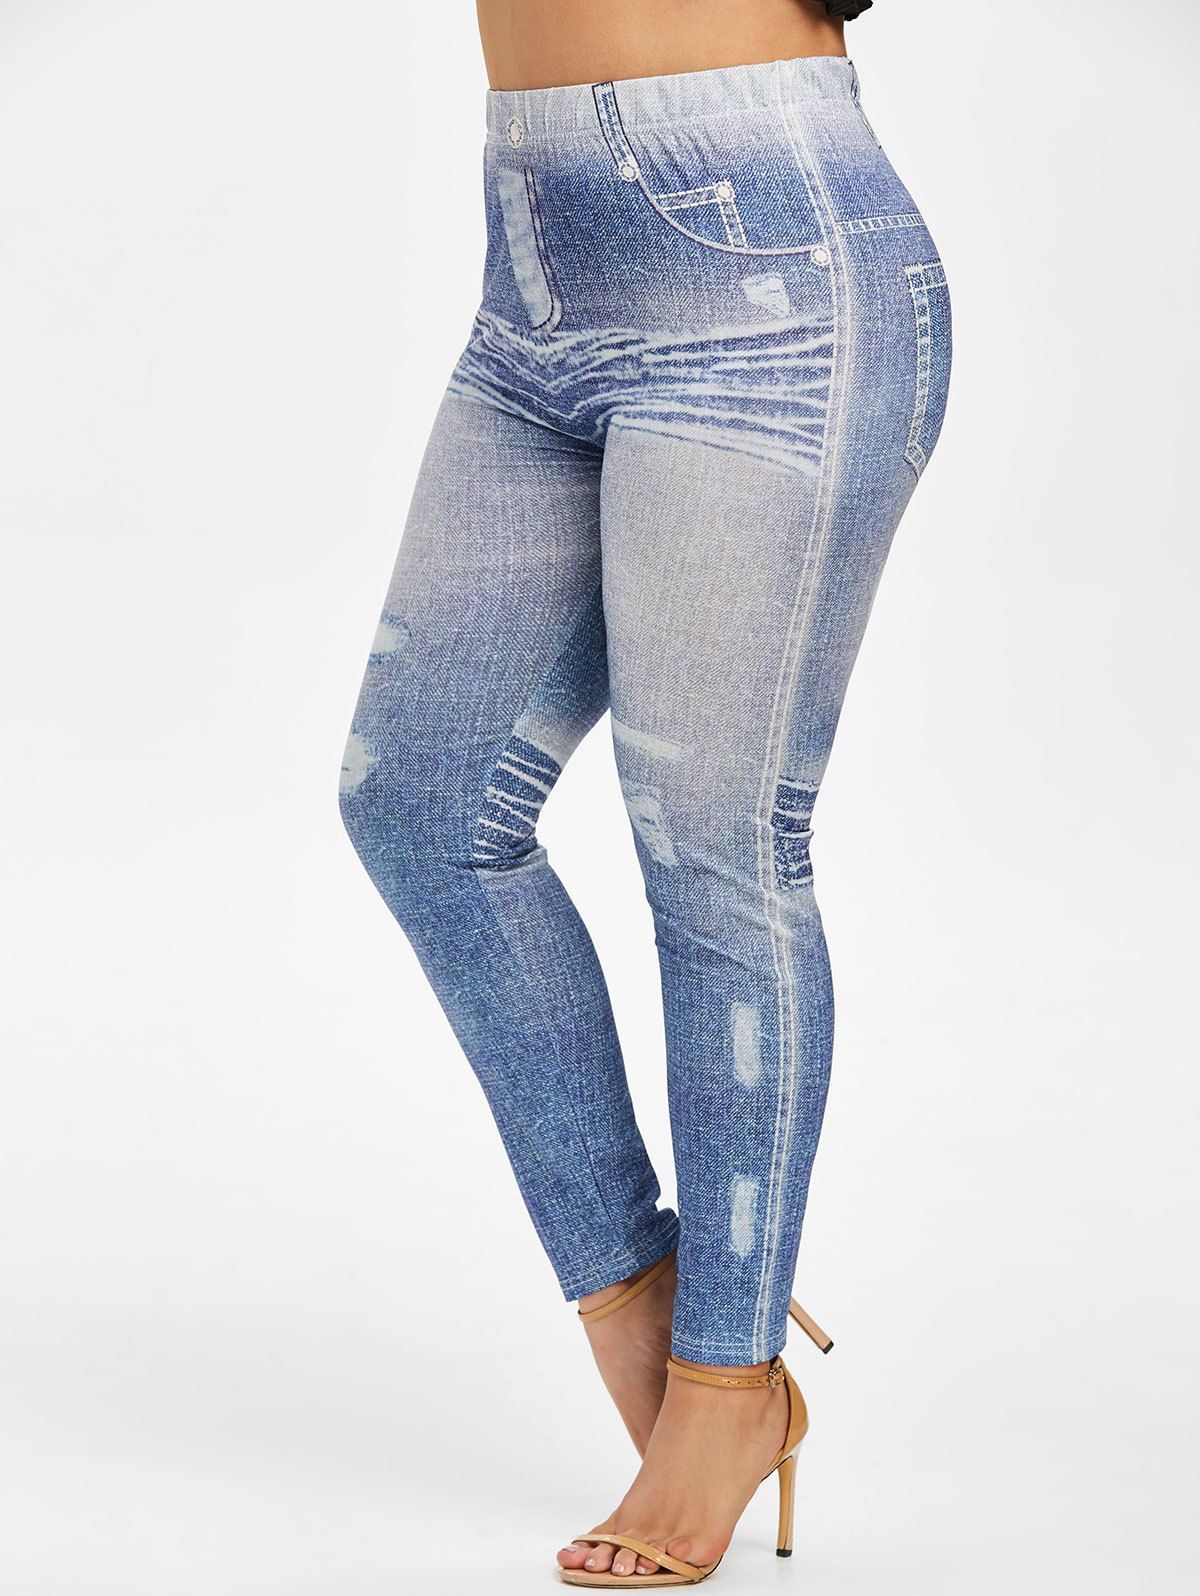 Creamy Soft USA Flag Denim Jeans Extra Plus Size Leggings - 3X-5X - USA  Fashion™